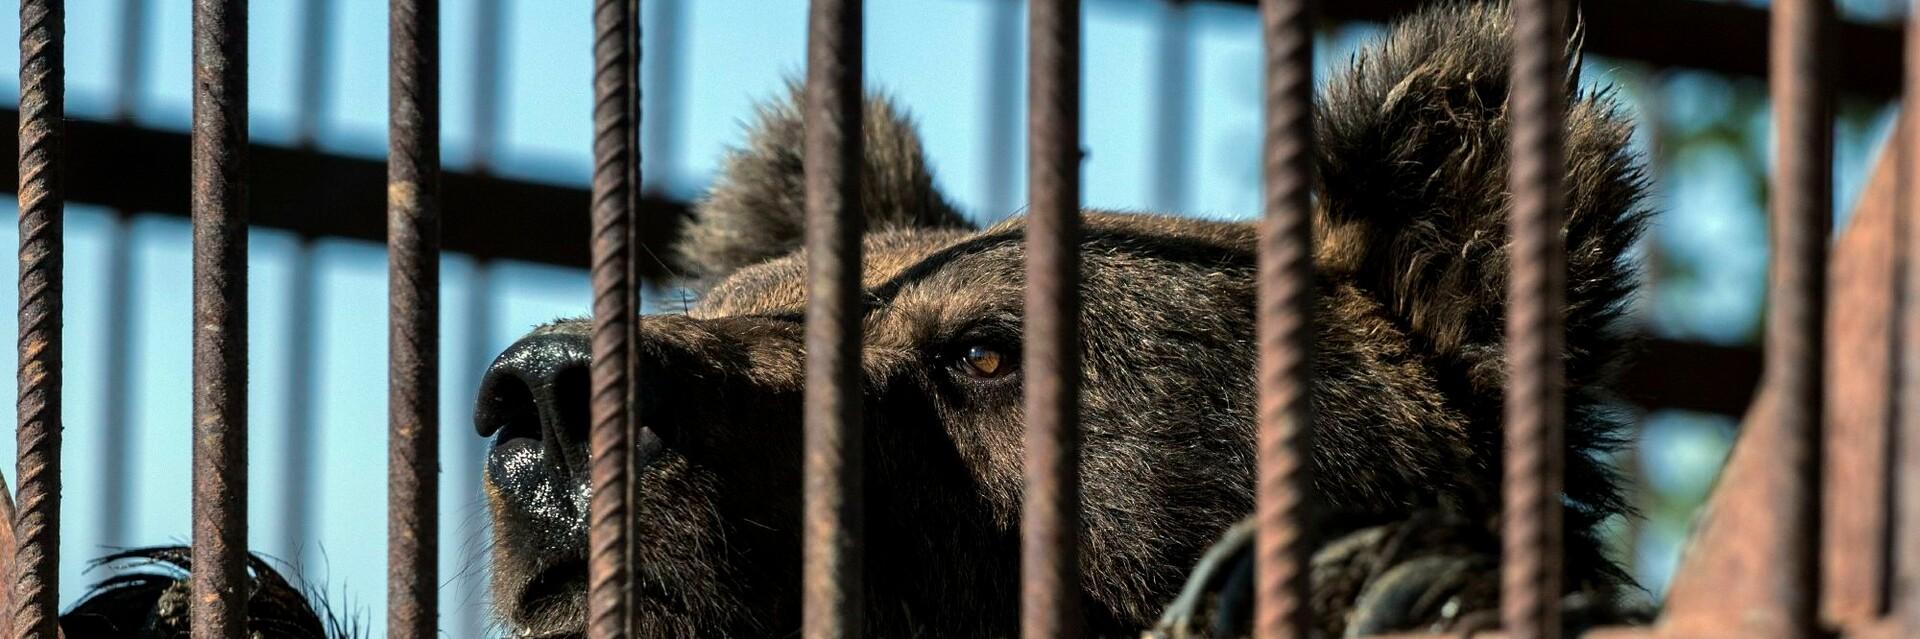 Un ours en cage en Serbie